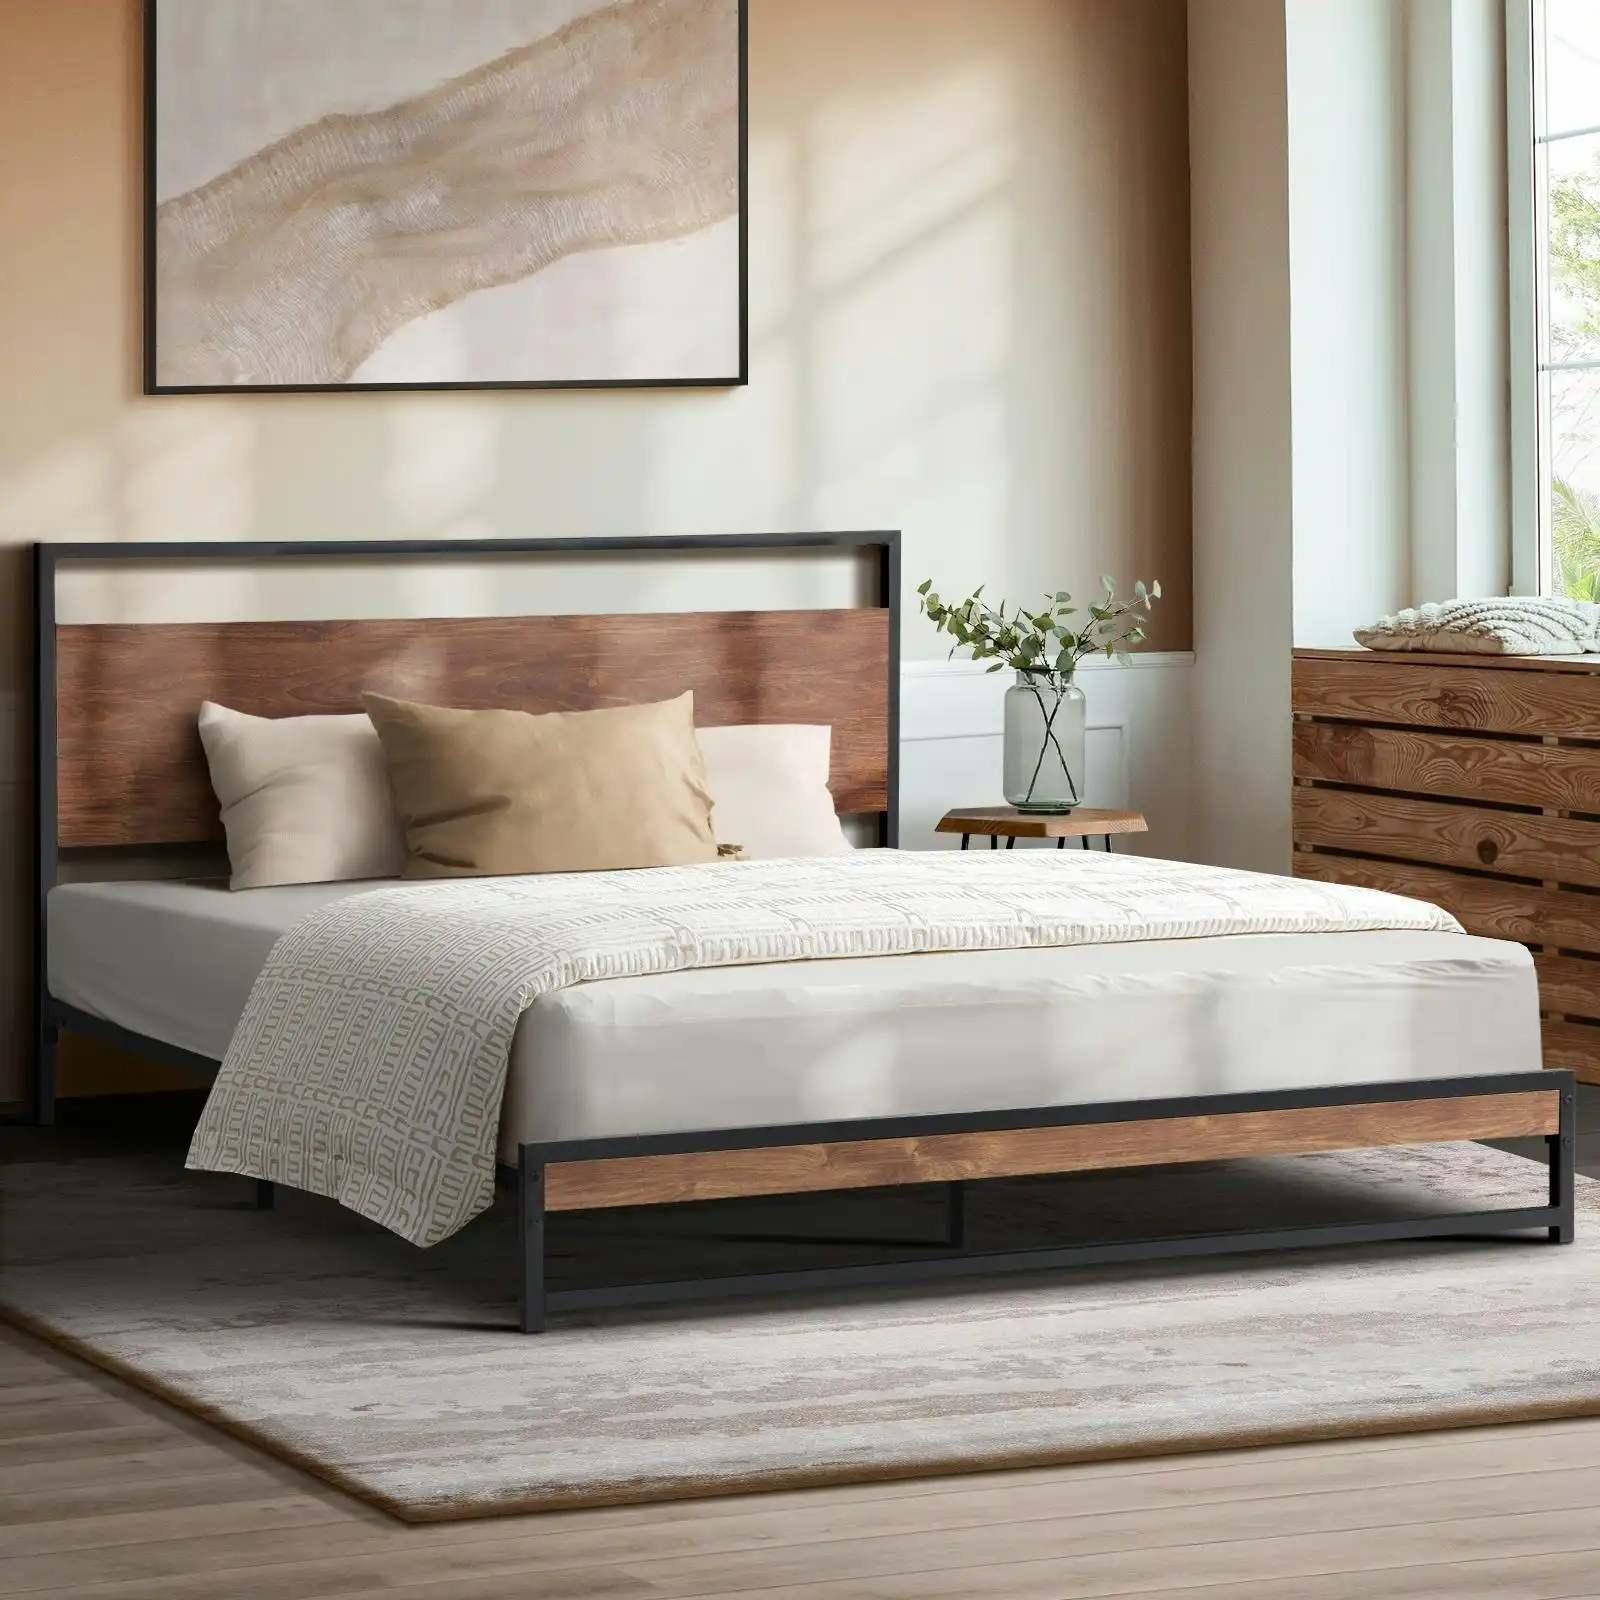 Oikiture Metal Bed Frame Queen Size Beds Base Platform Wood